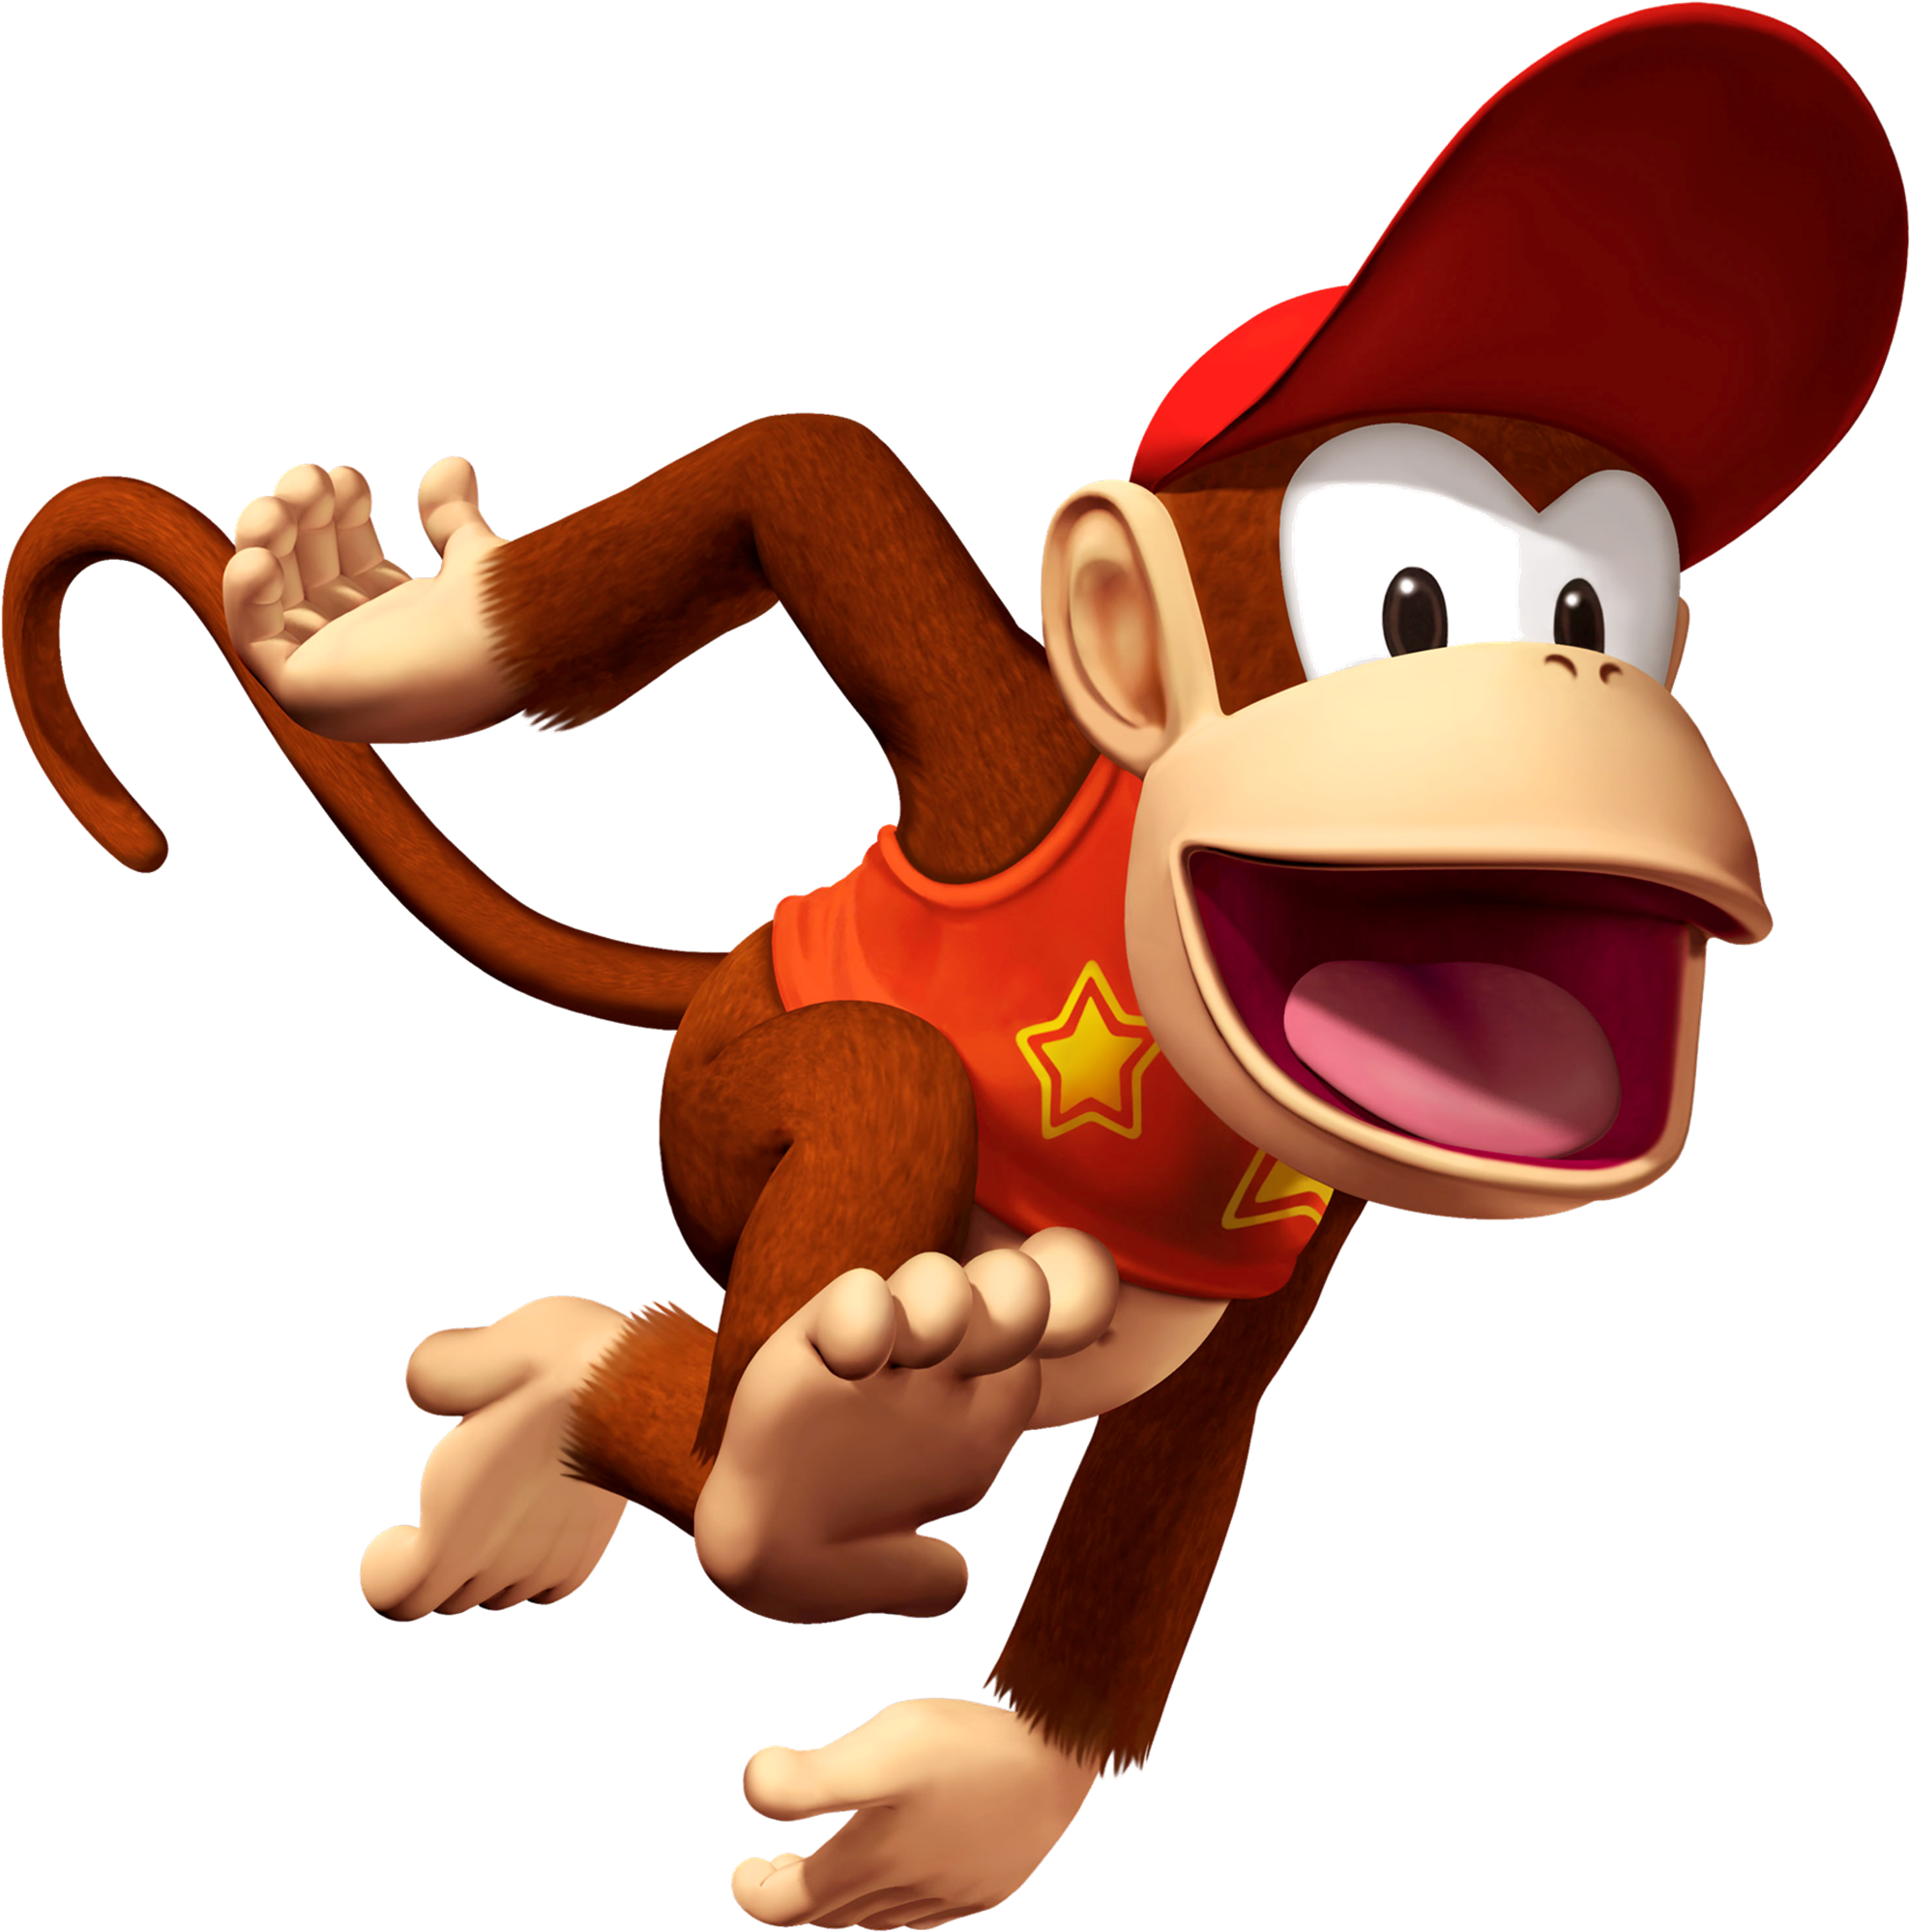 Donkey Kong Character PNG HD Quality